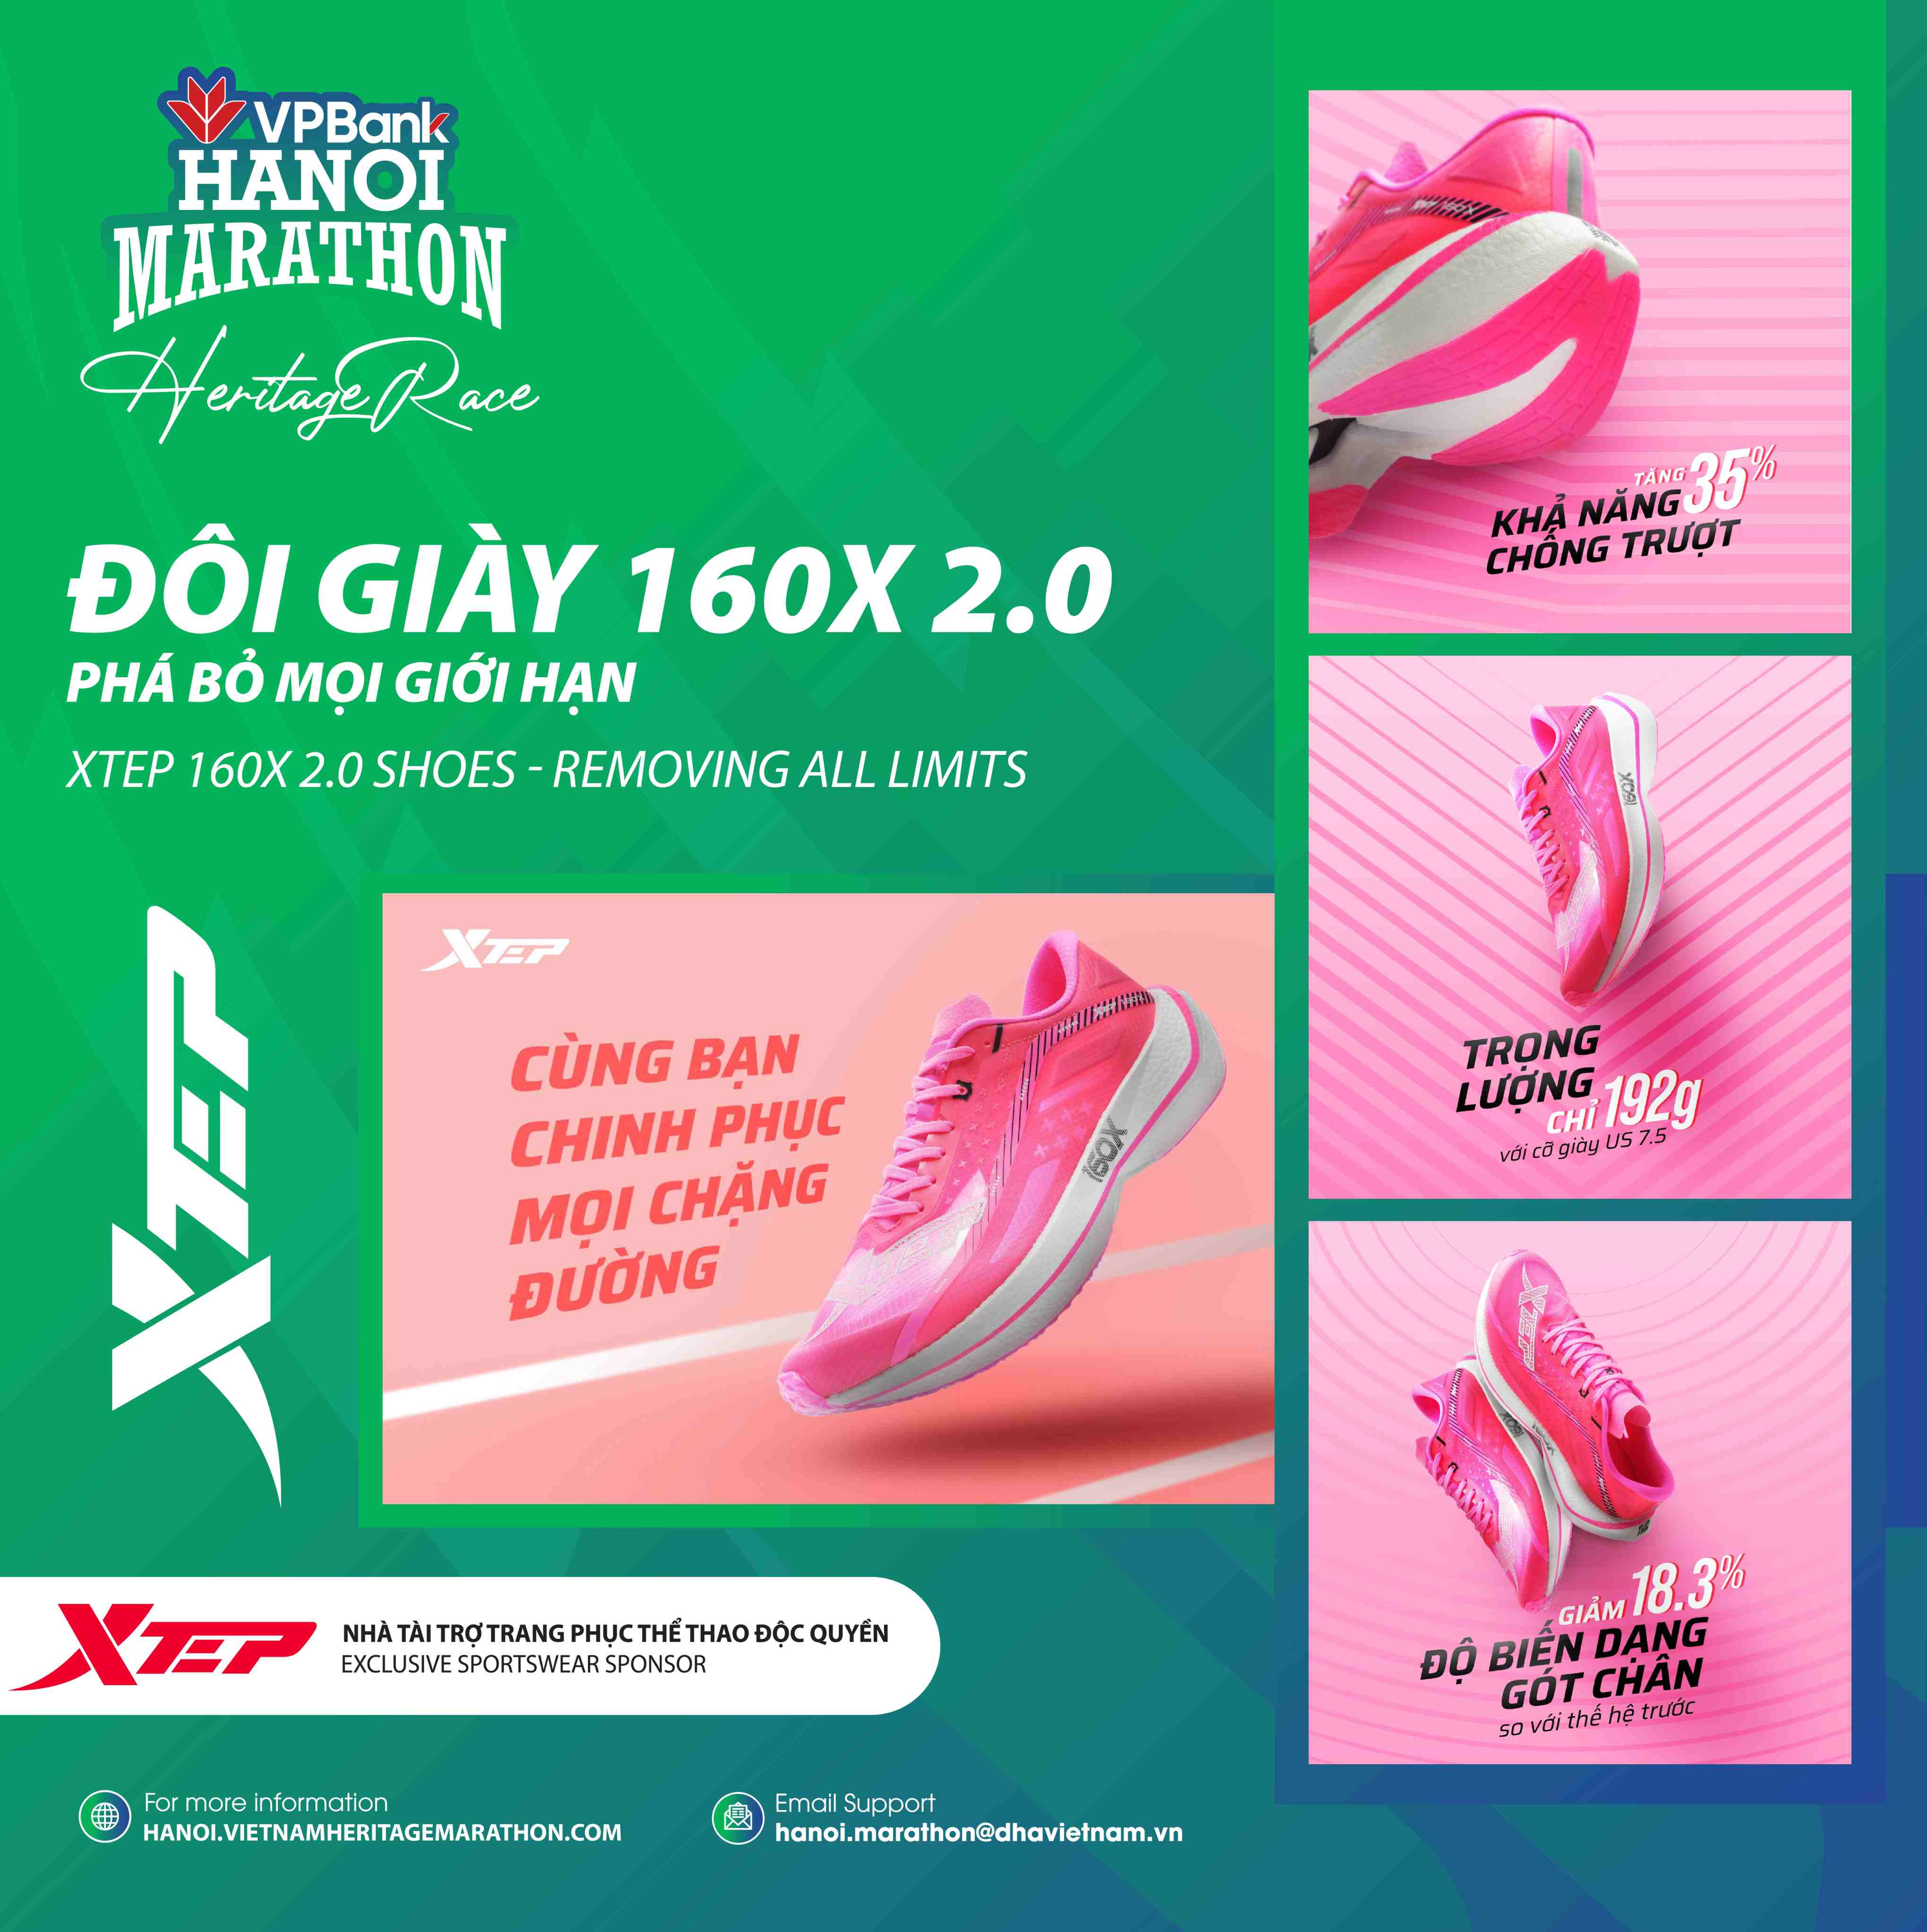 XTEP Brings 160x 2.0 Shoes To VPBank Hanoi Marathon 2021